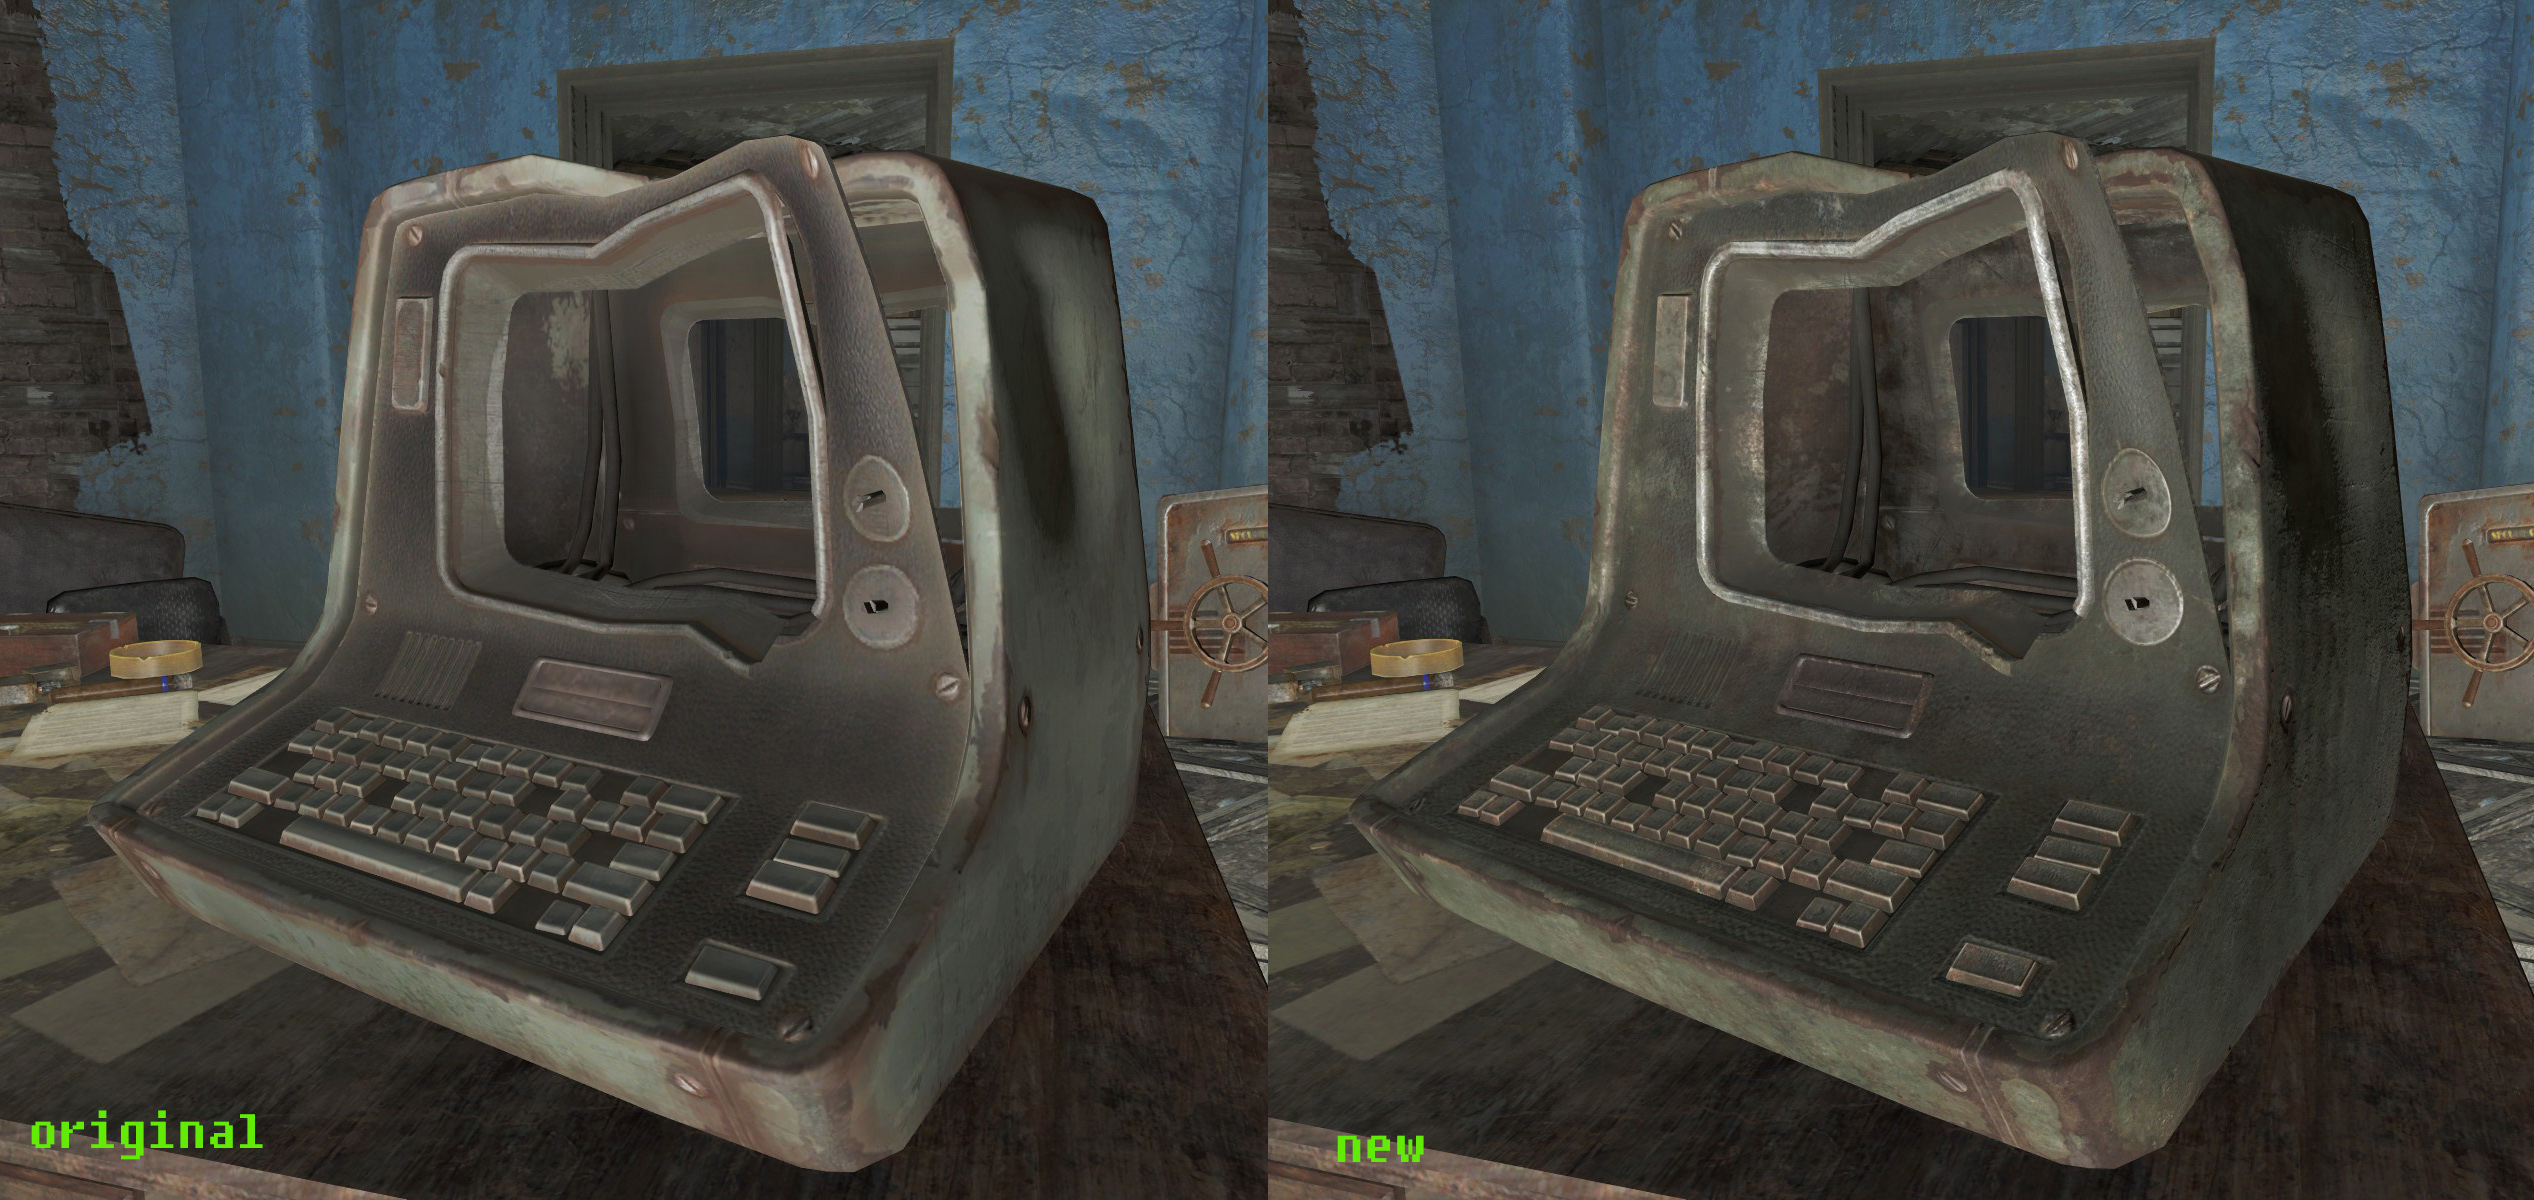 Computer Terminal retexture - Fallout 4 / FO4 mods